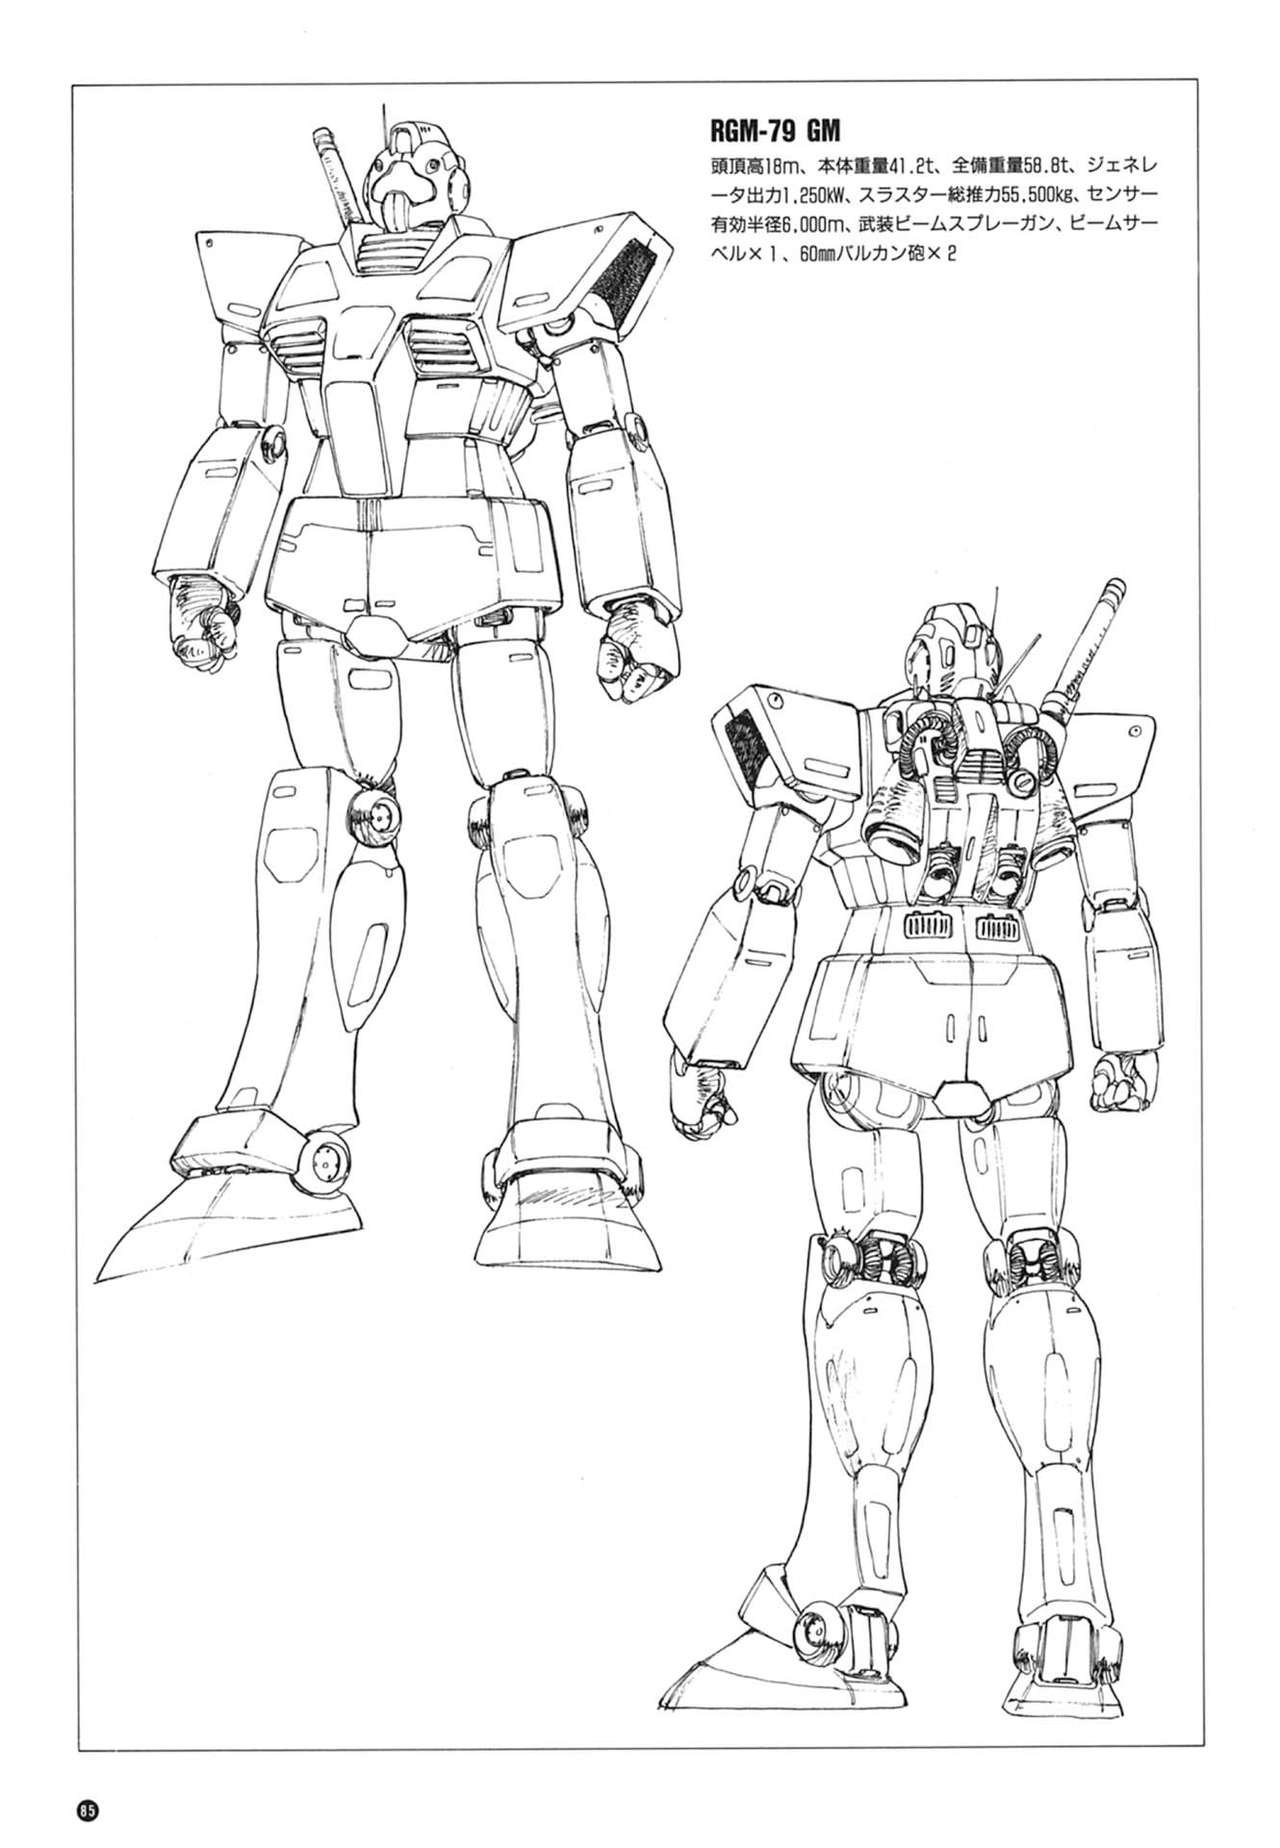 [Kazuhisa Kondo] Kazuhisa Kondo 2D & 3D Works - Go Ahead - From Mobile Suit Gundam to Original Mechanism 84